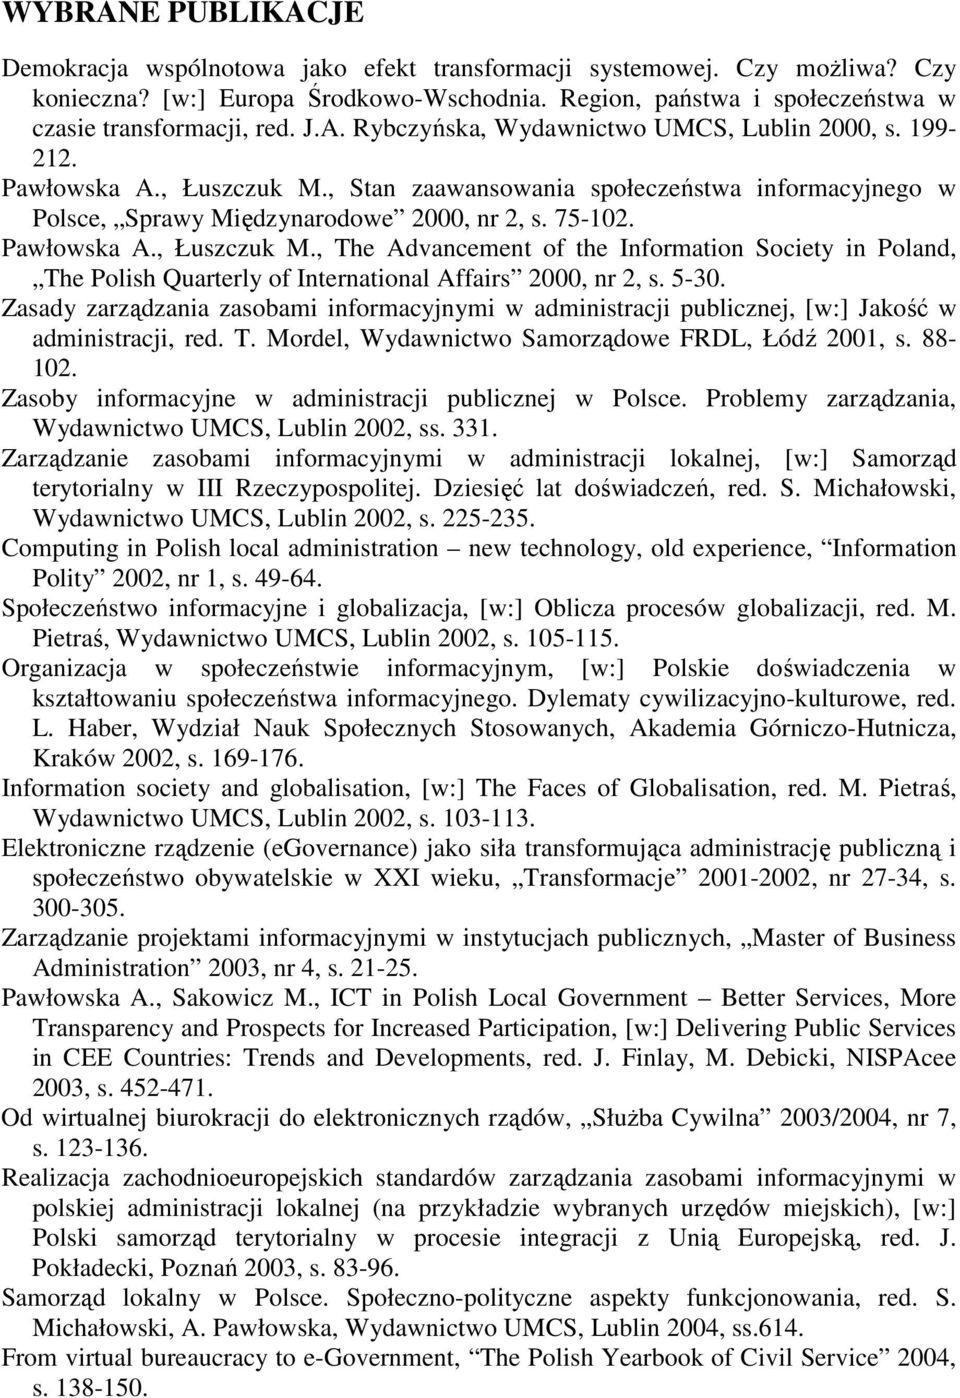 Pawłowska A., Łuszczuk M., The Advancement of the Information Society in Poland, The Polish Quarterly of International Affairs 2000, nr 2, s. 5-30.